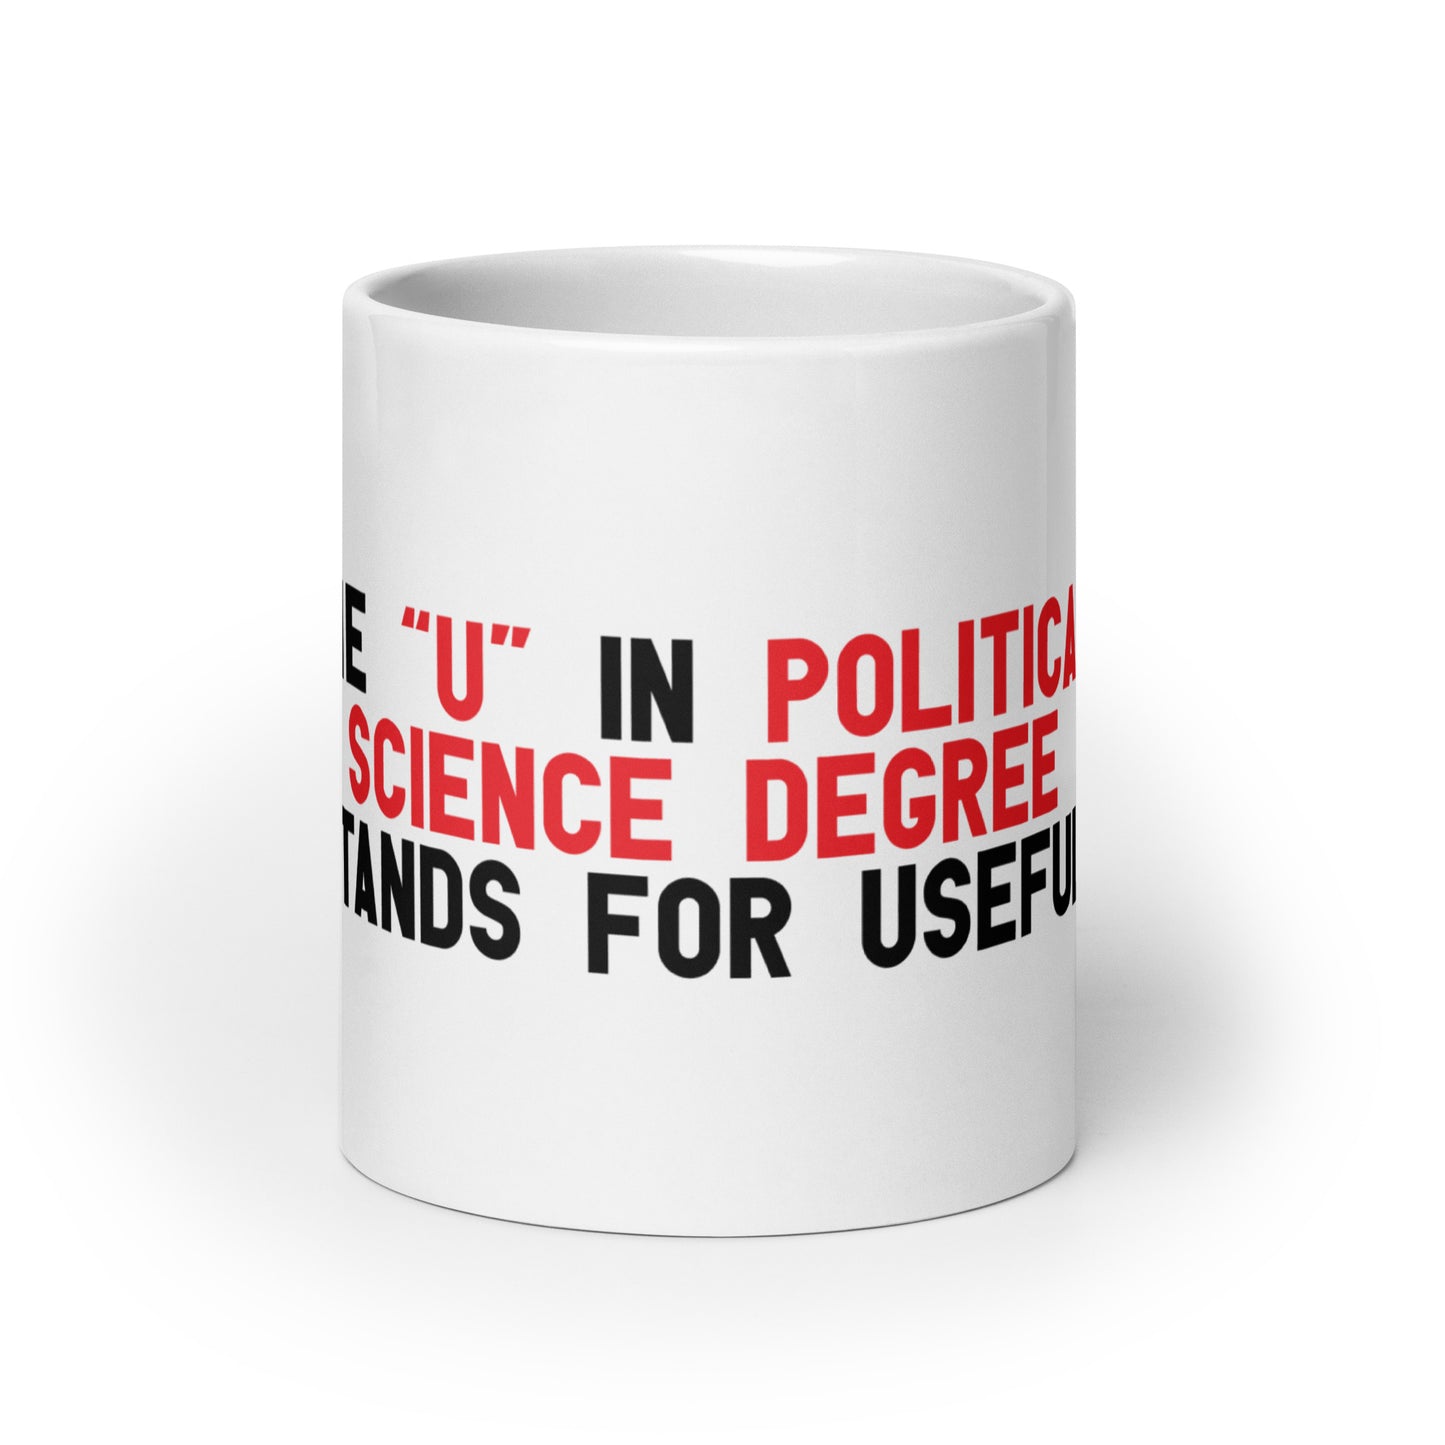 The "U" in Political Science Degree mug